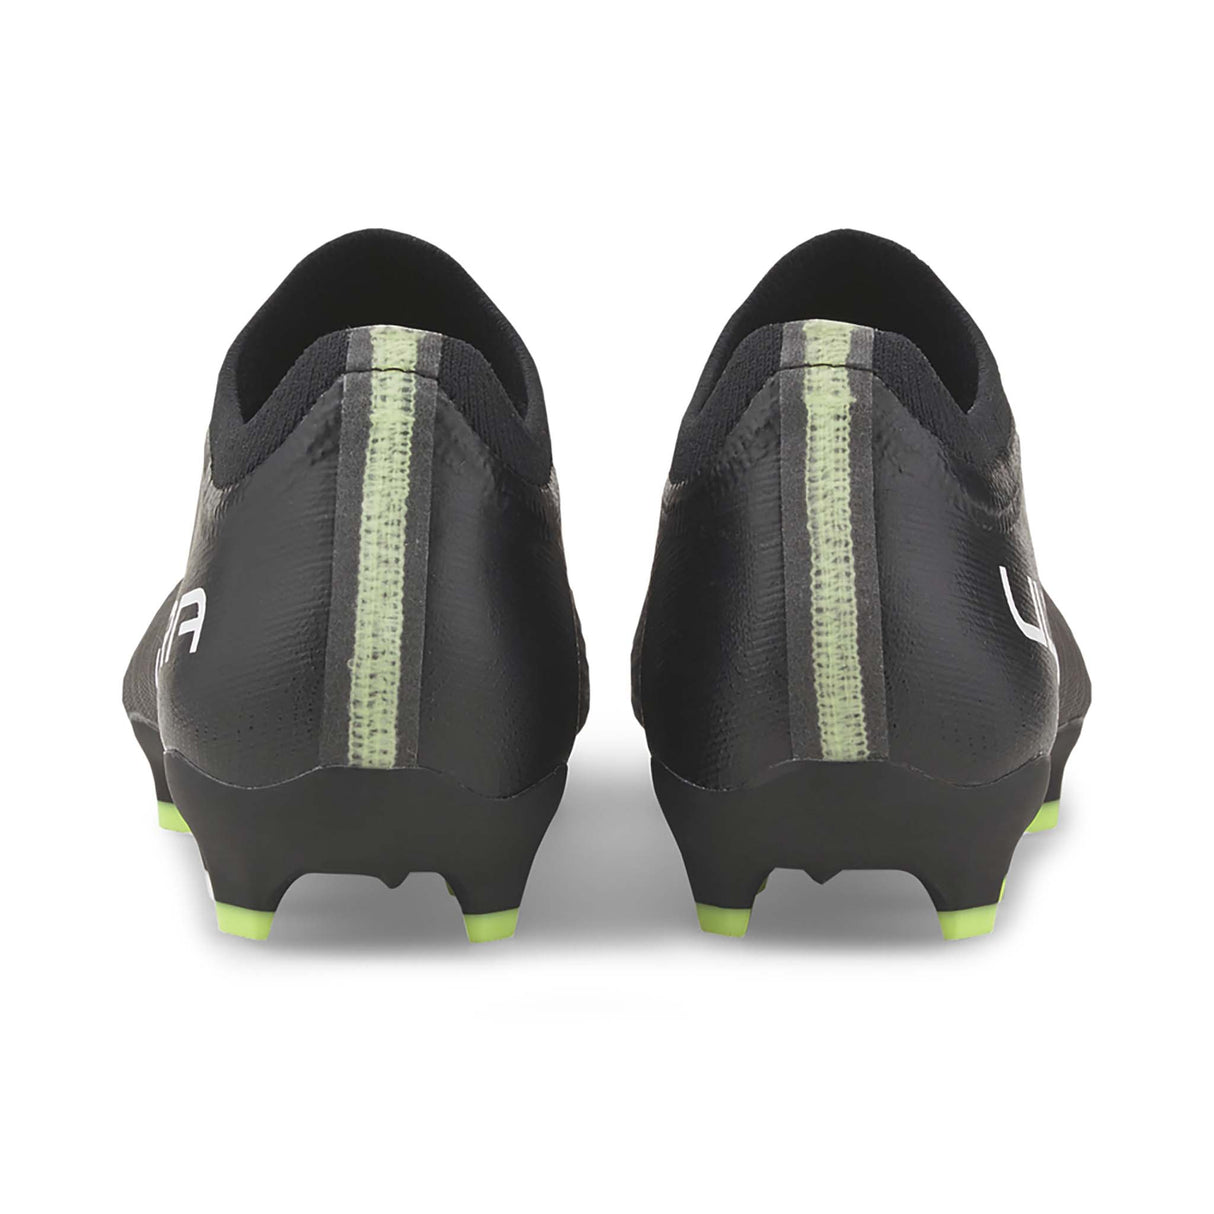 Puma Ultra 3.4 FG/AG souliers de soccer junior black white fizzy talon